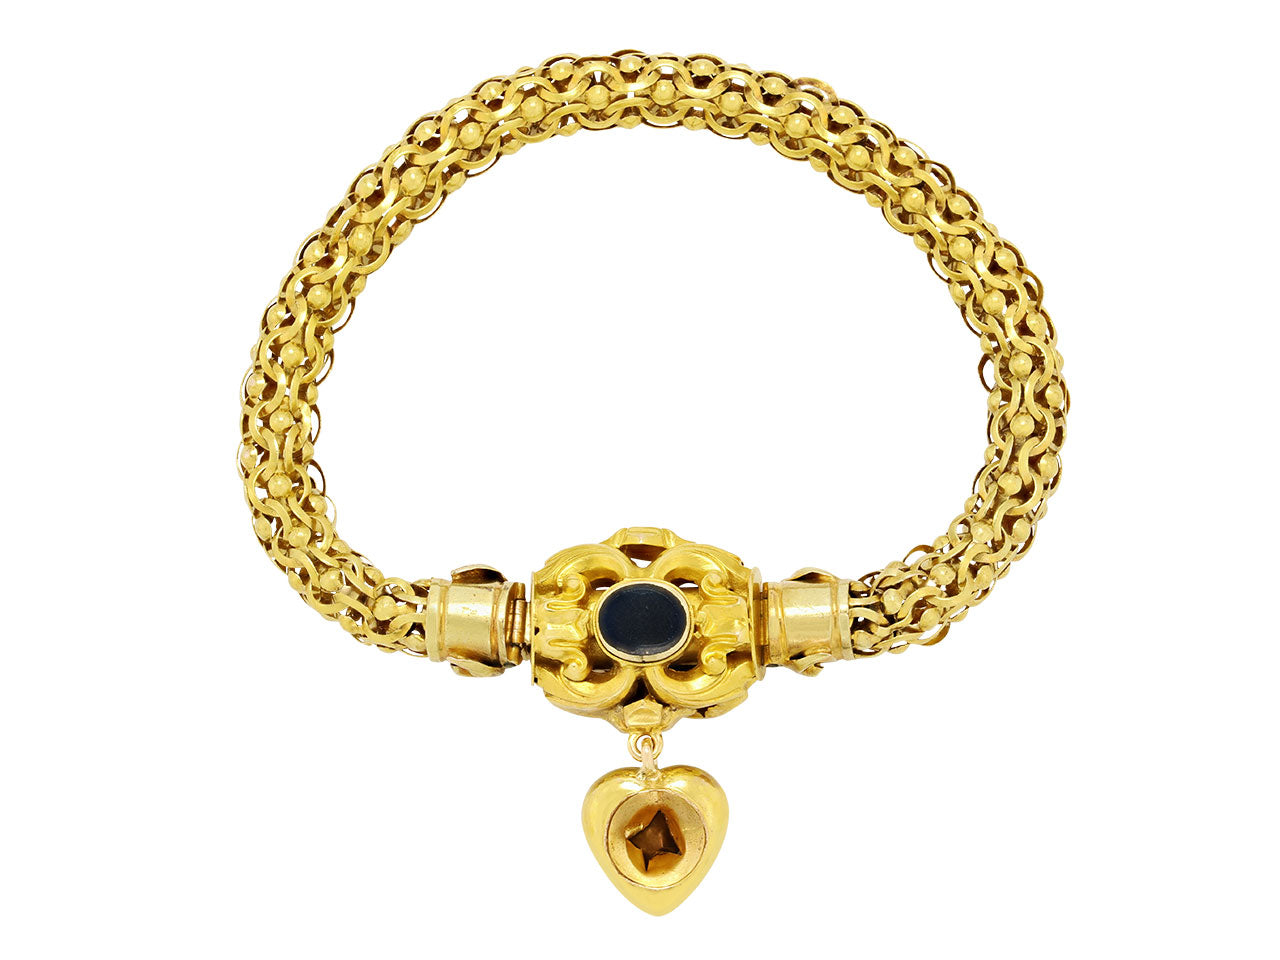 Antique Georgian Harlequin Bracelet in 14K Gold